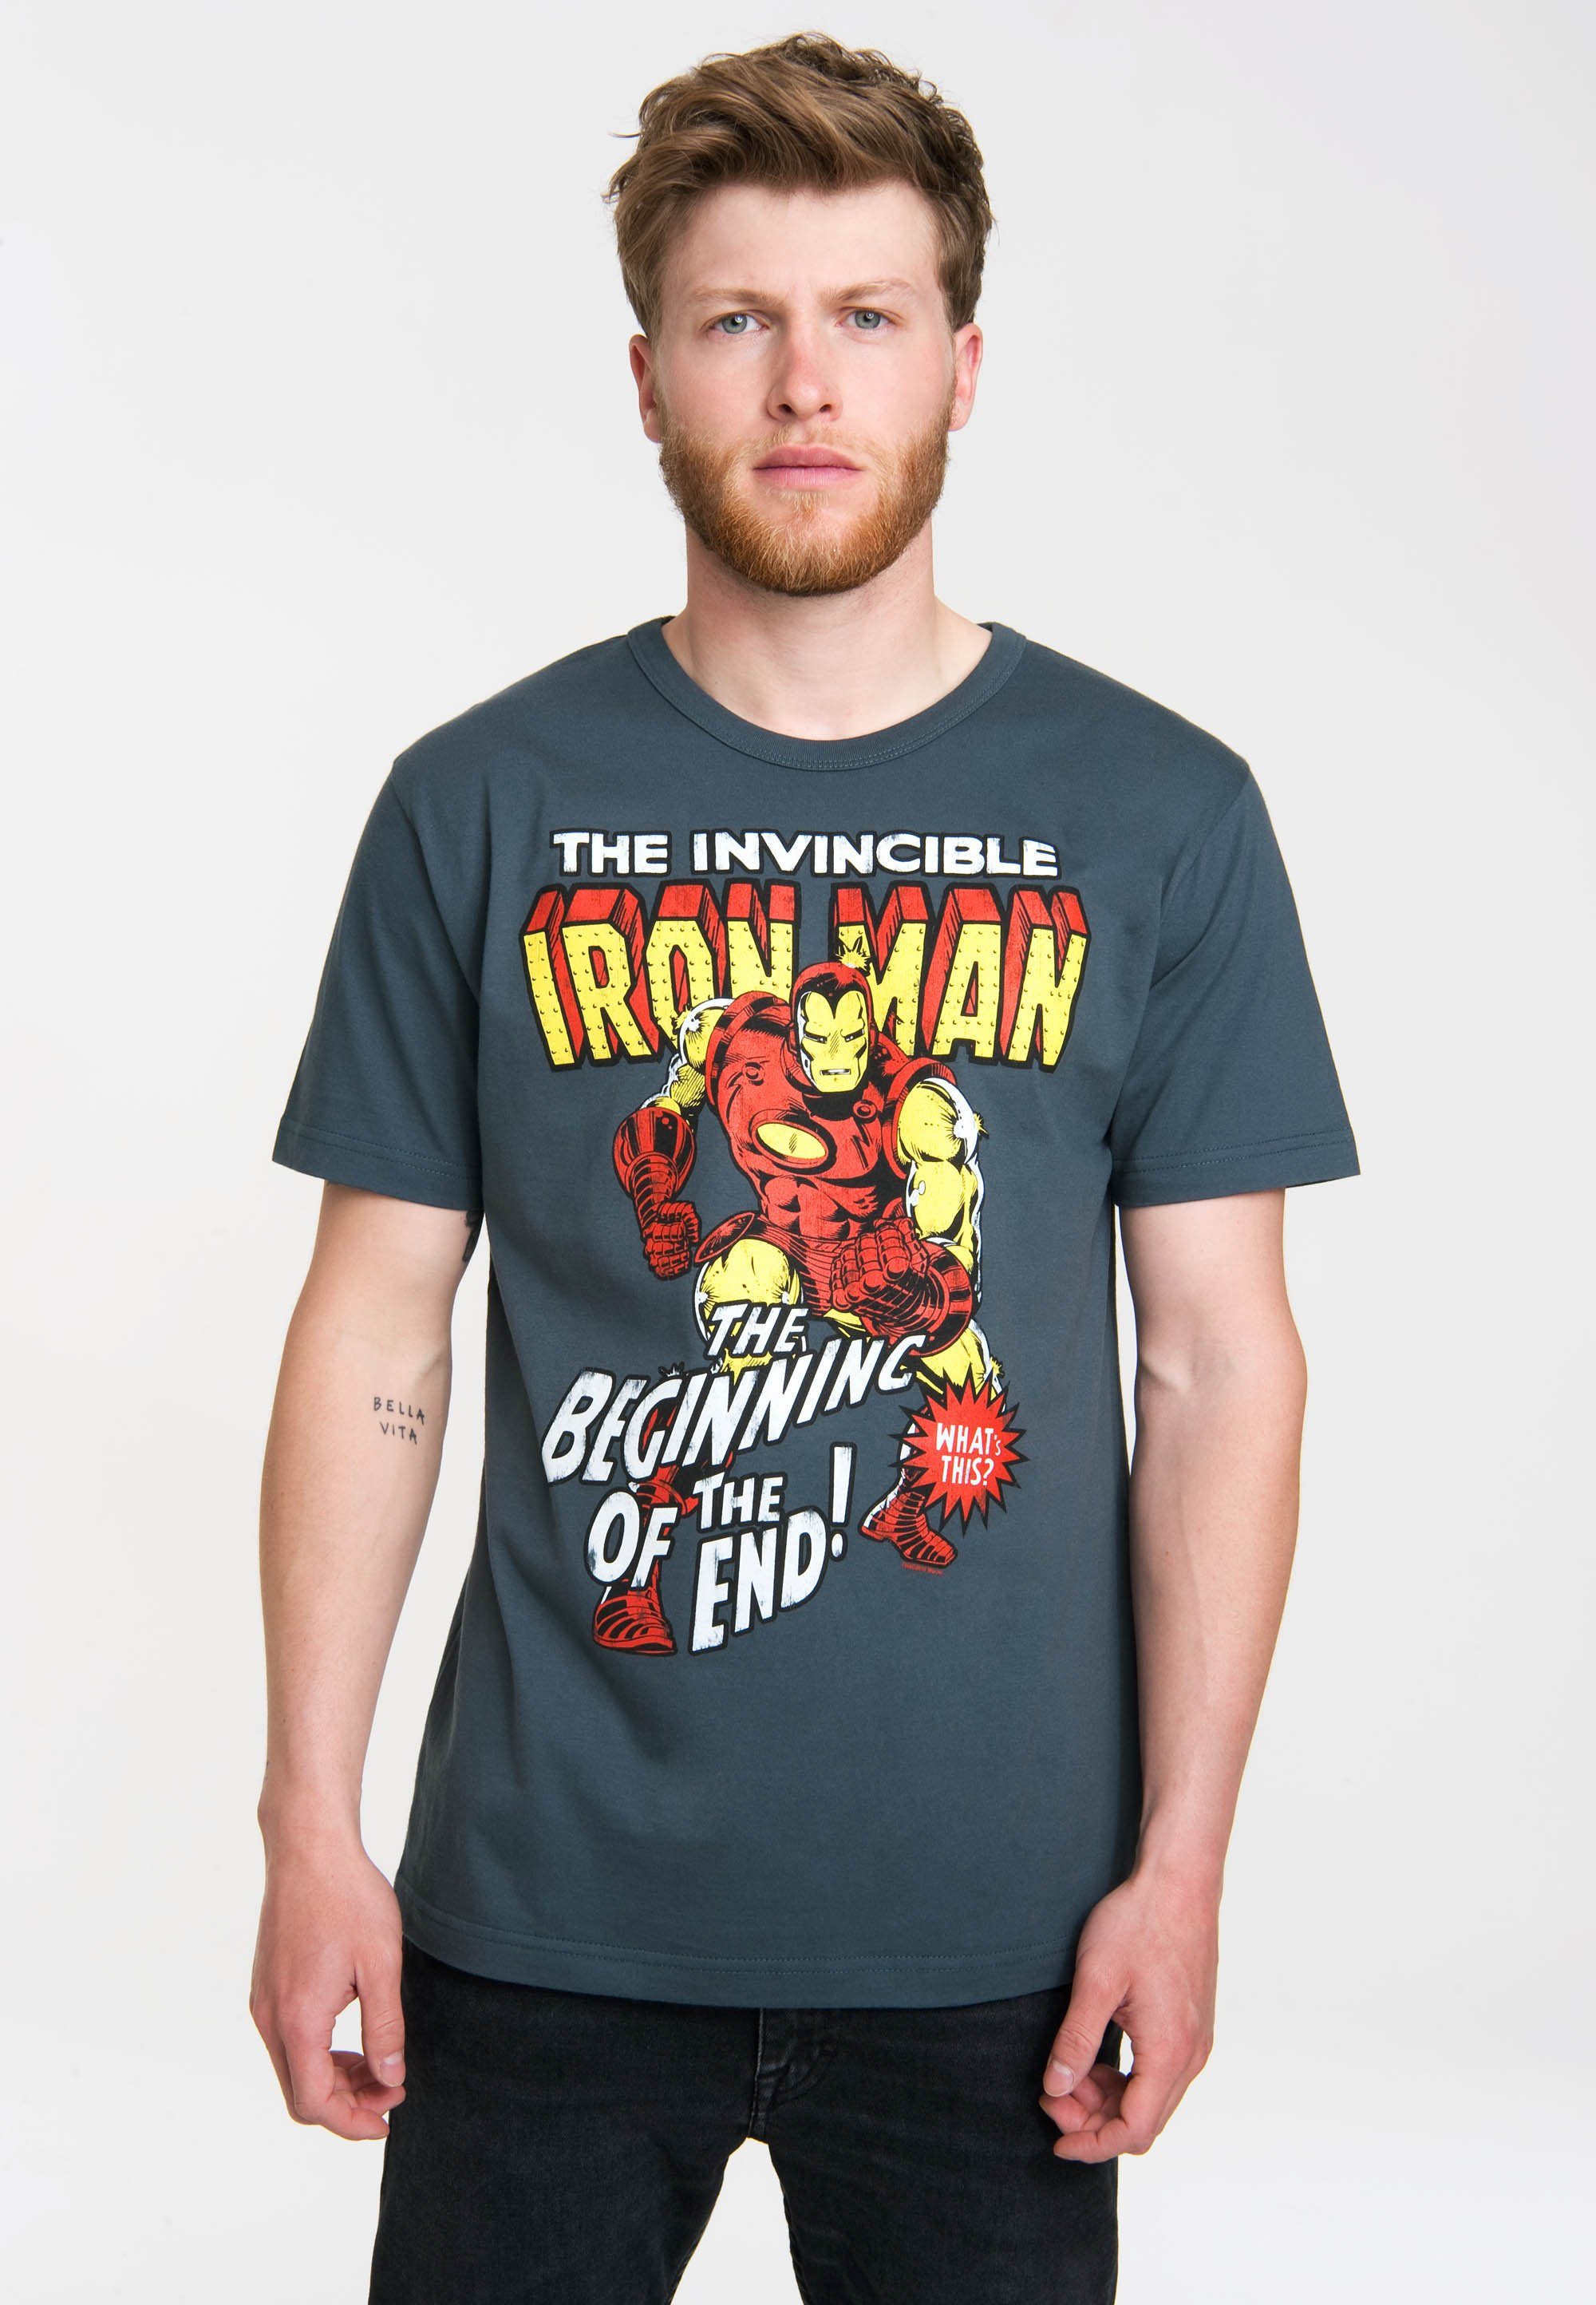 Man Iron Logo LOGOSHIRT Marvel mit Retro-Print T-Shirt -